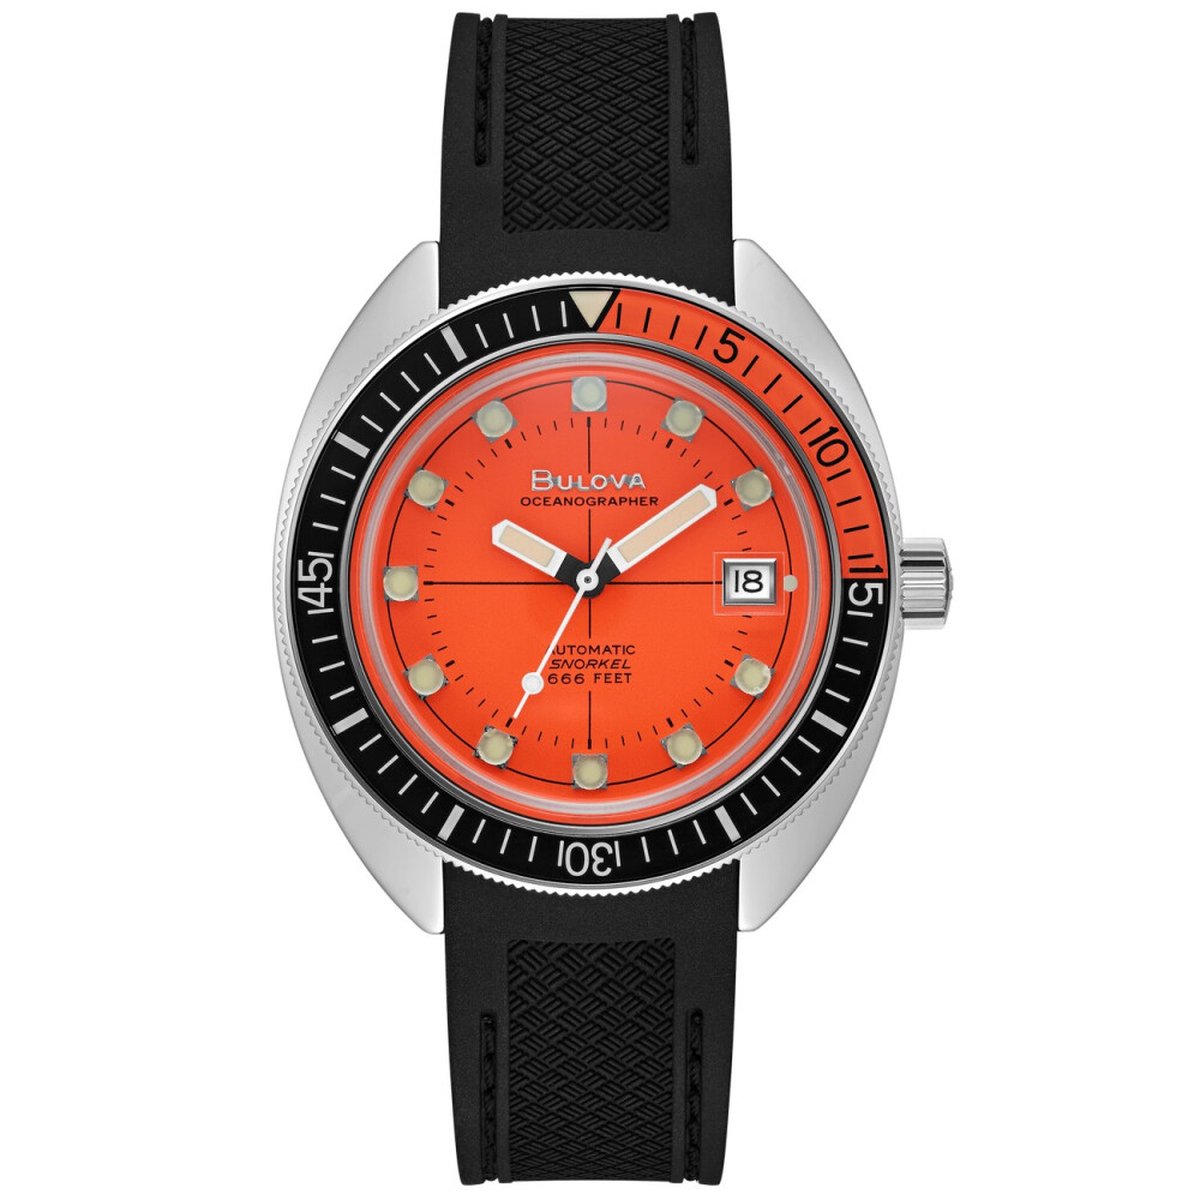 Bulova Oceanographer Horloge - Bulova heren horloge - Oranje - diameter 44 mm - kleur gecoat roestvrij staal